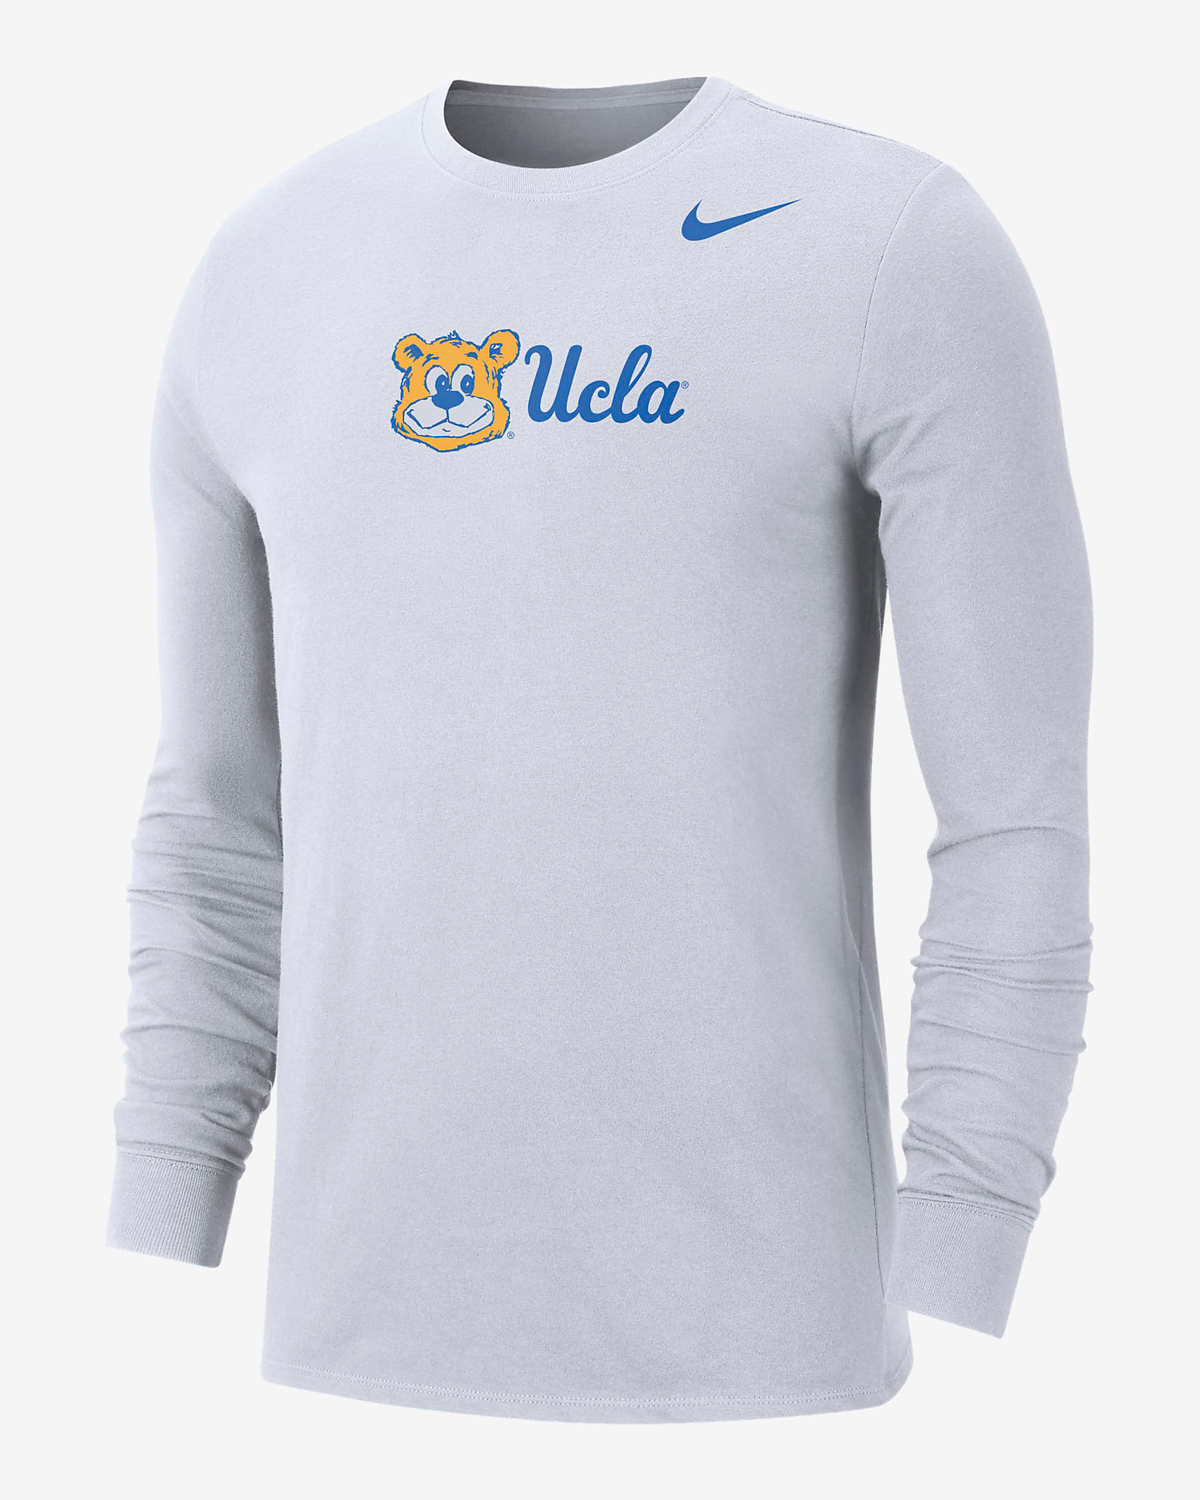 Nike-Dunk-Low-UCLA-Bruins-Shirt-3